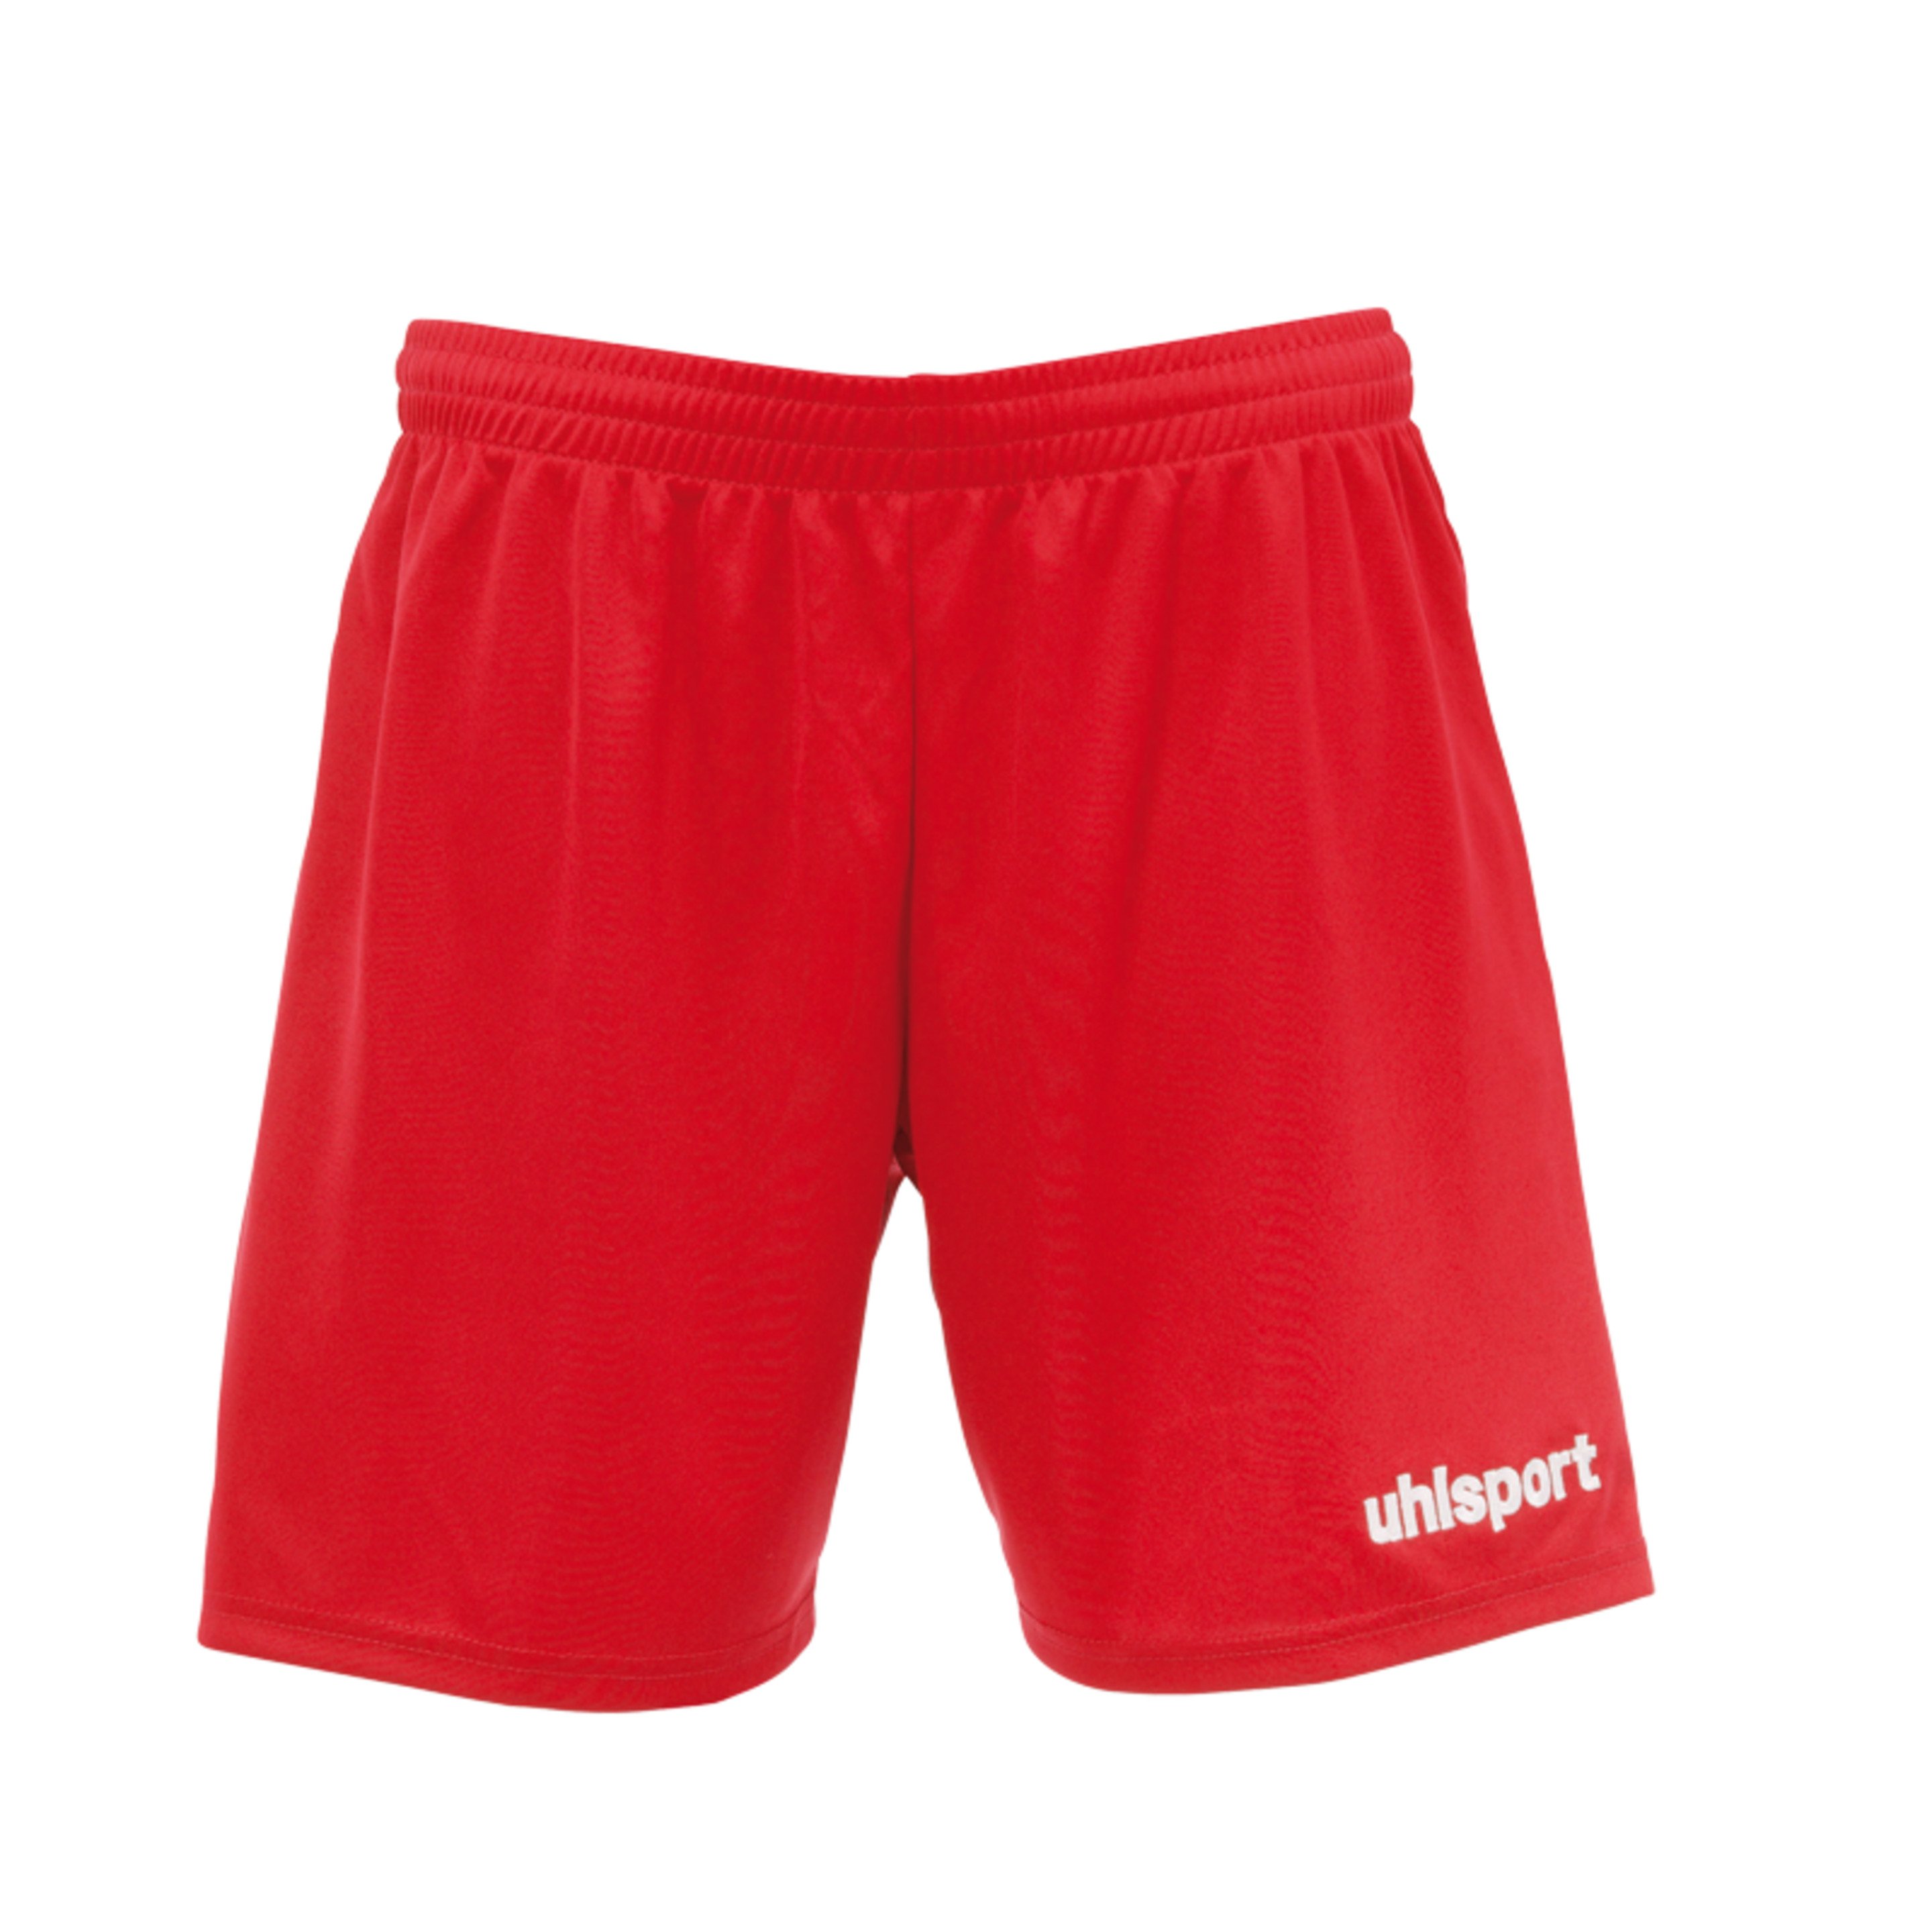 Center Basic Shorts De Mujer Rojo Uhlsport - rojo - 